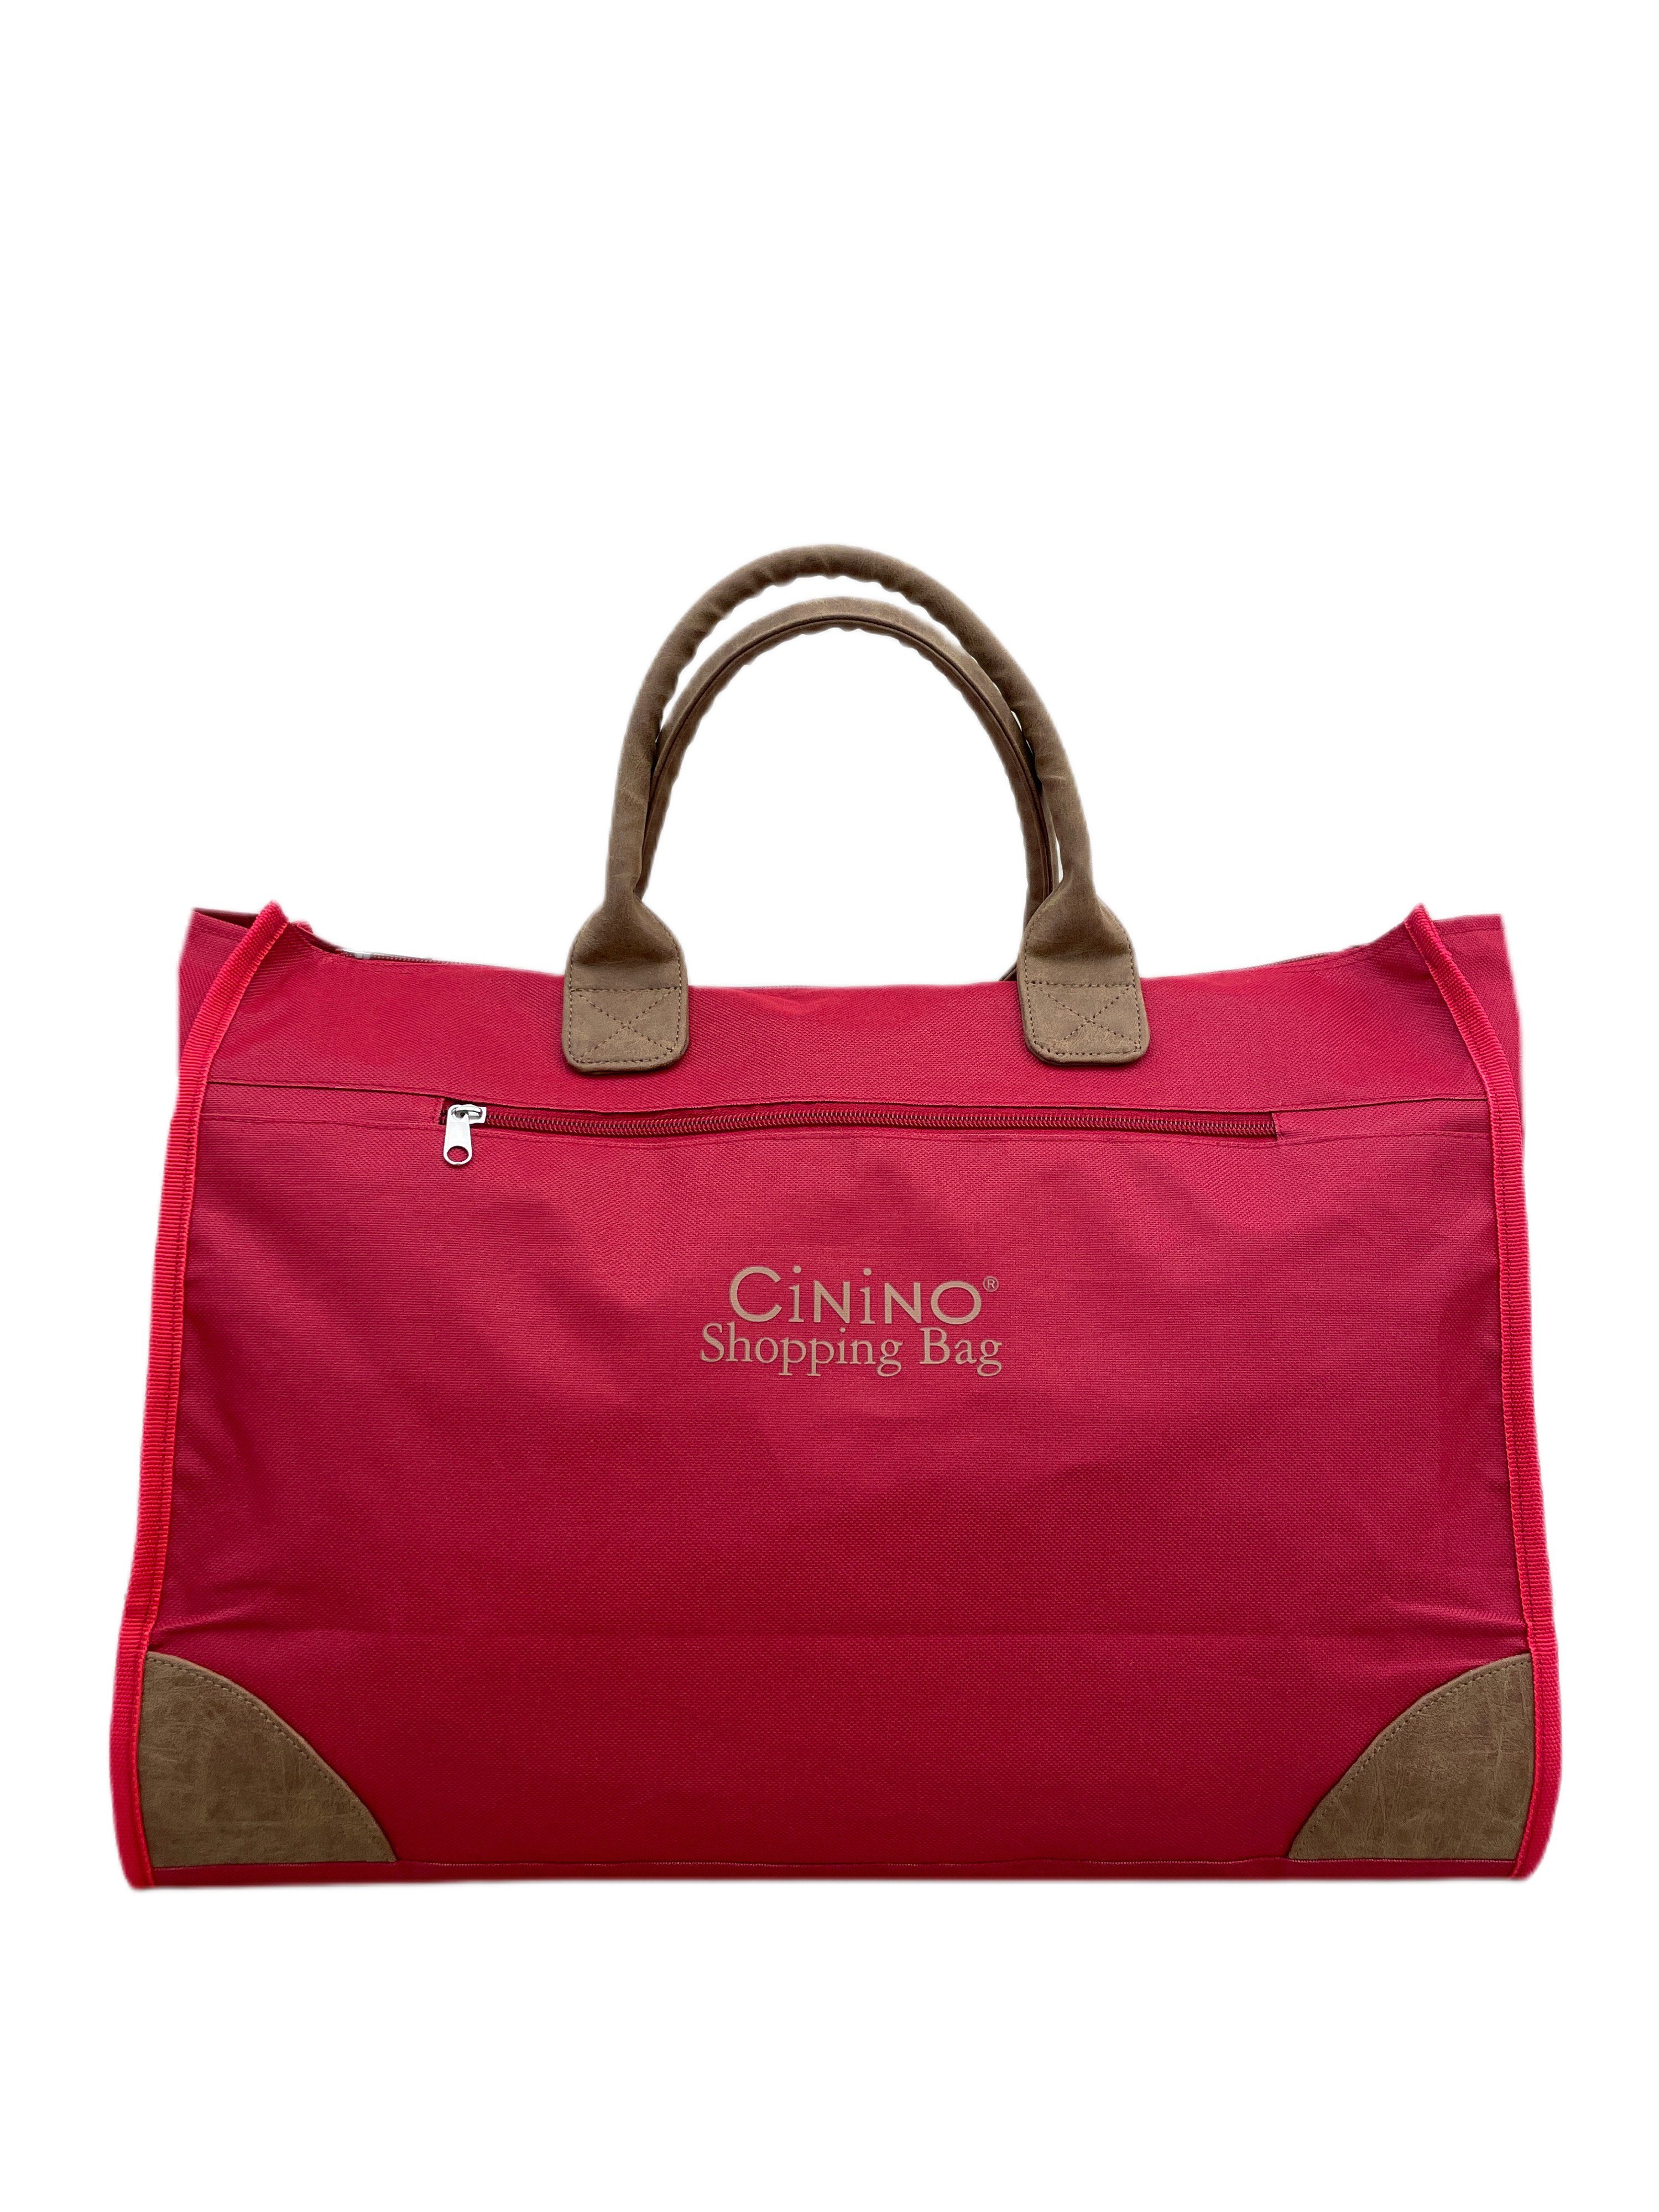 Cinino Handtasche Shopping Bag, Shopping Bag Einkaufstasche aus robustem Nylon Shopper